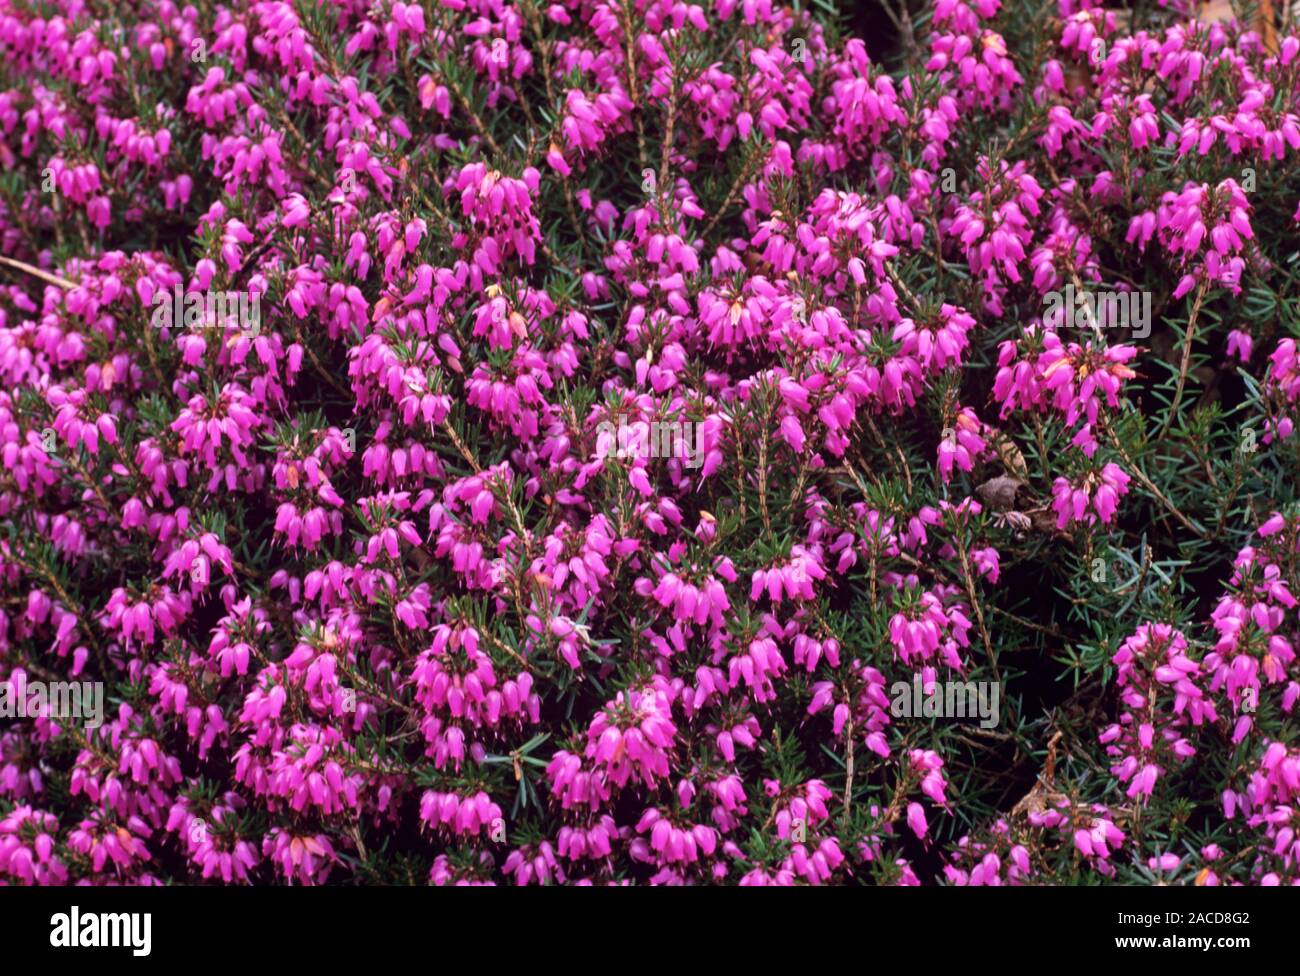 Heather (Erica carnea 'Lohse's Rubin') flowers. Stock Photo